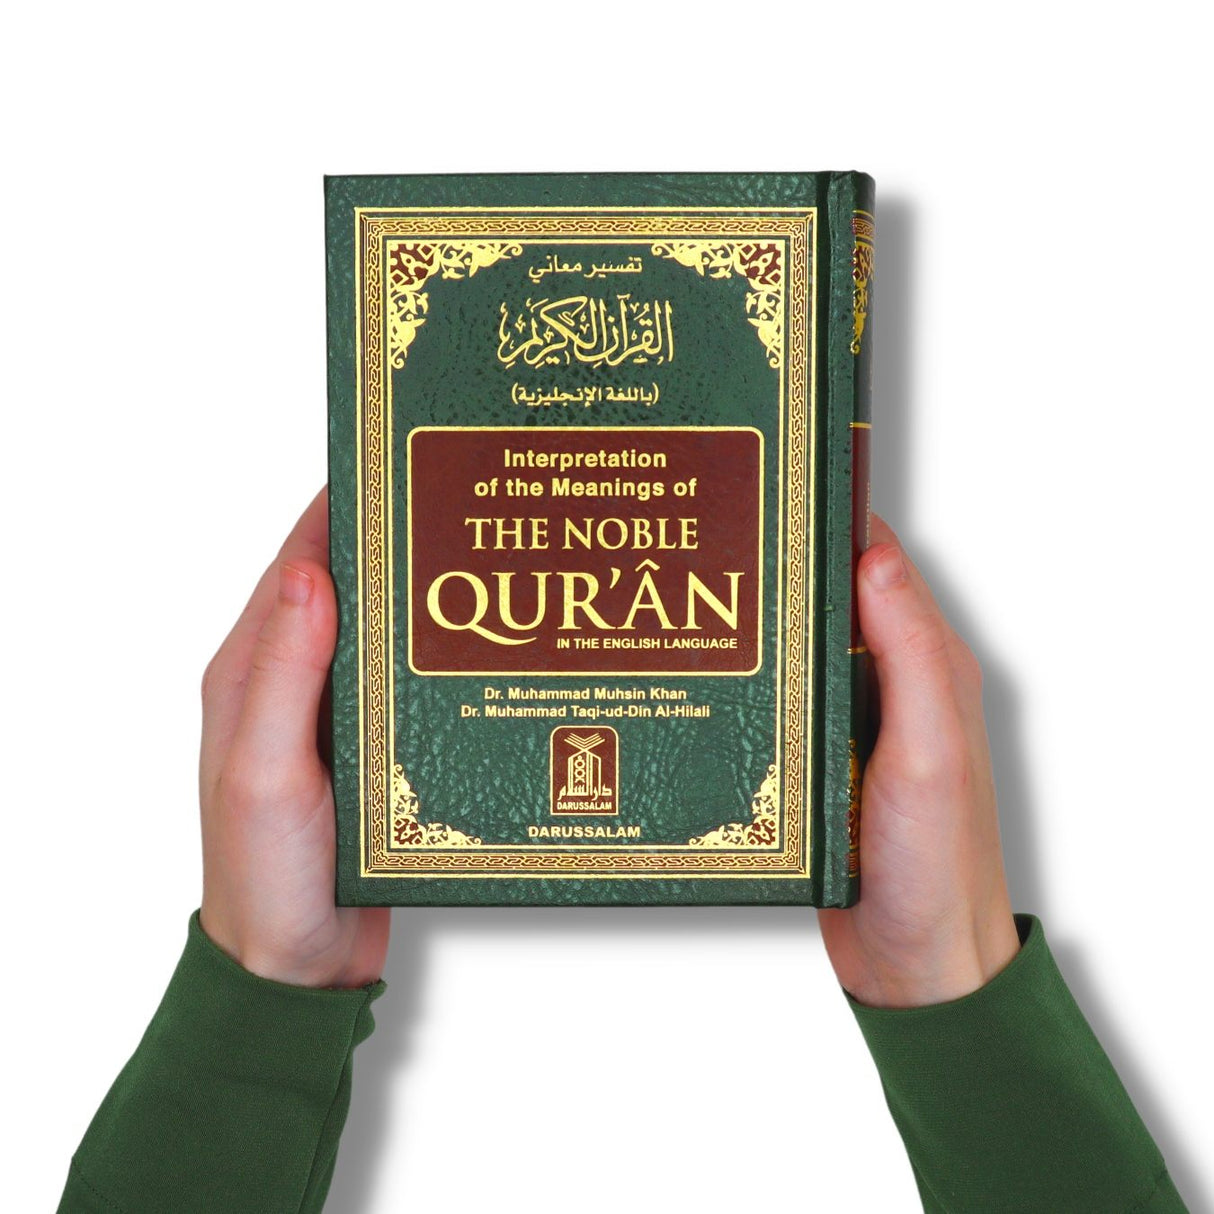 The Noble Quran Small 12x17m English - Arabic